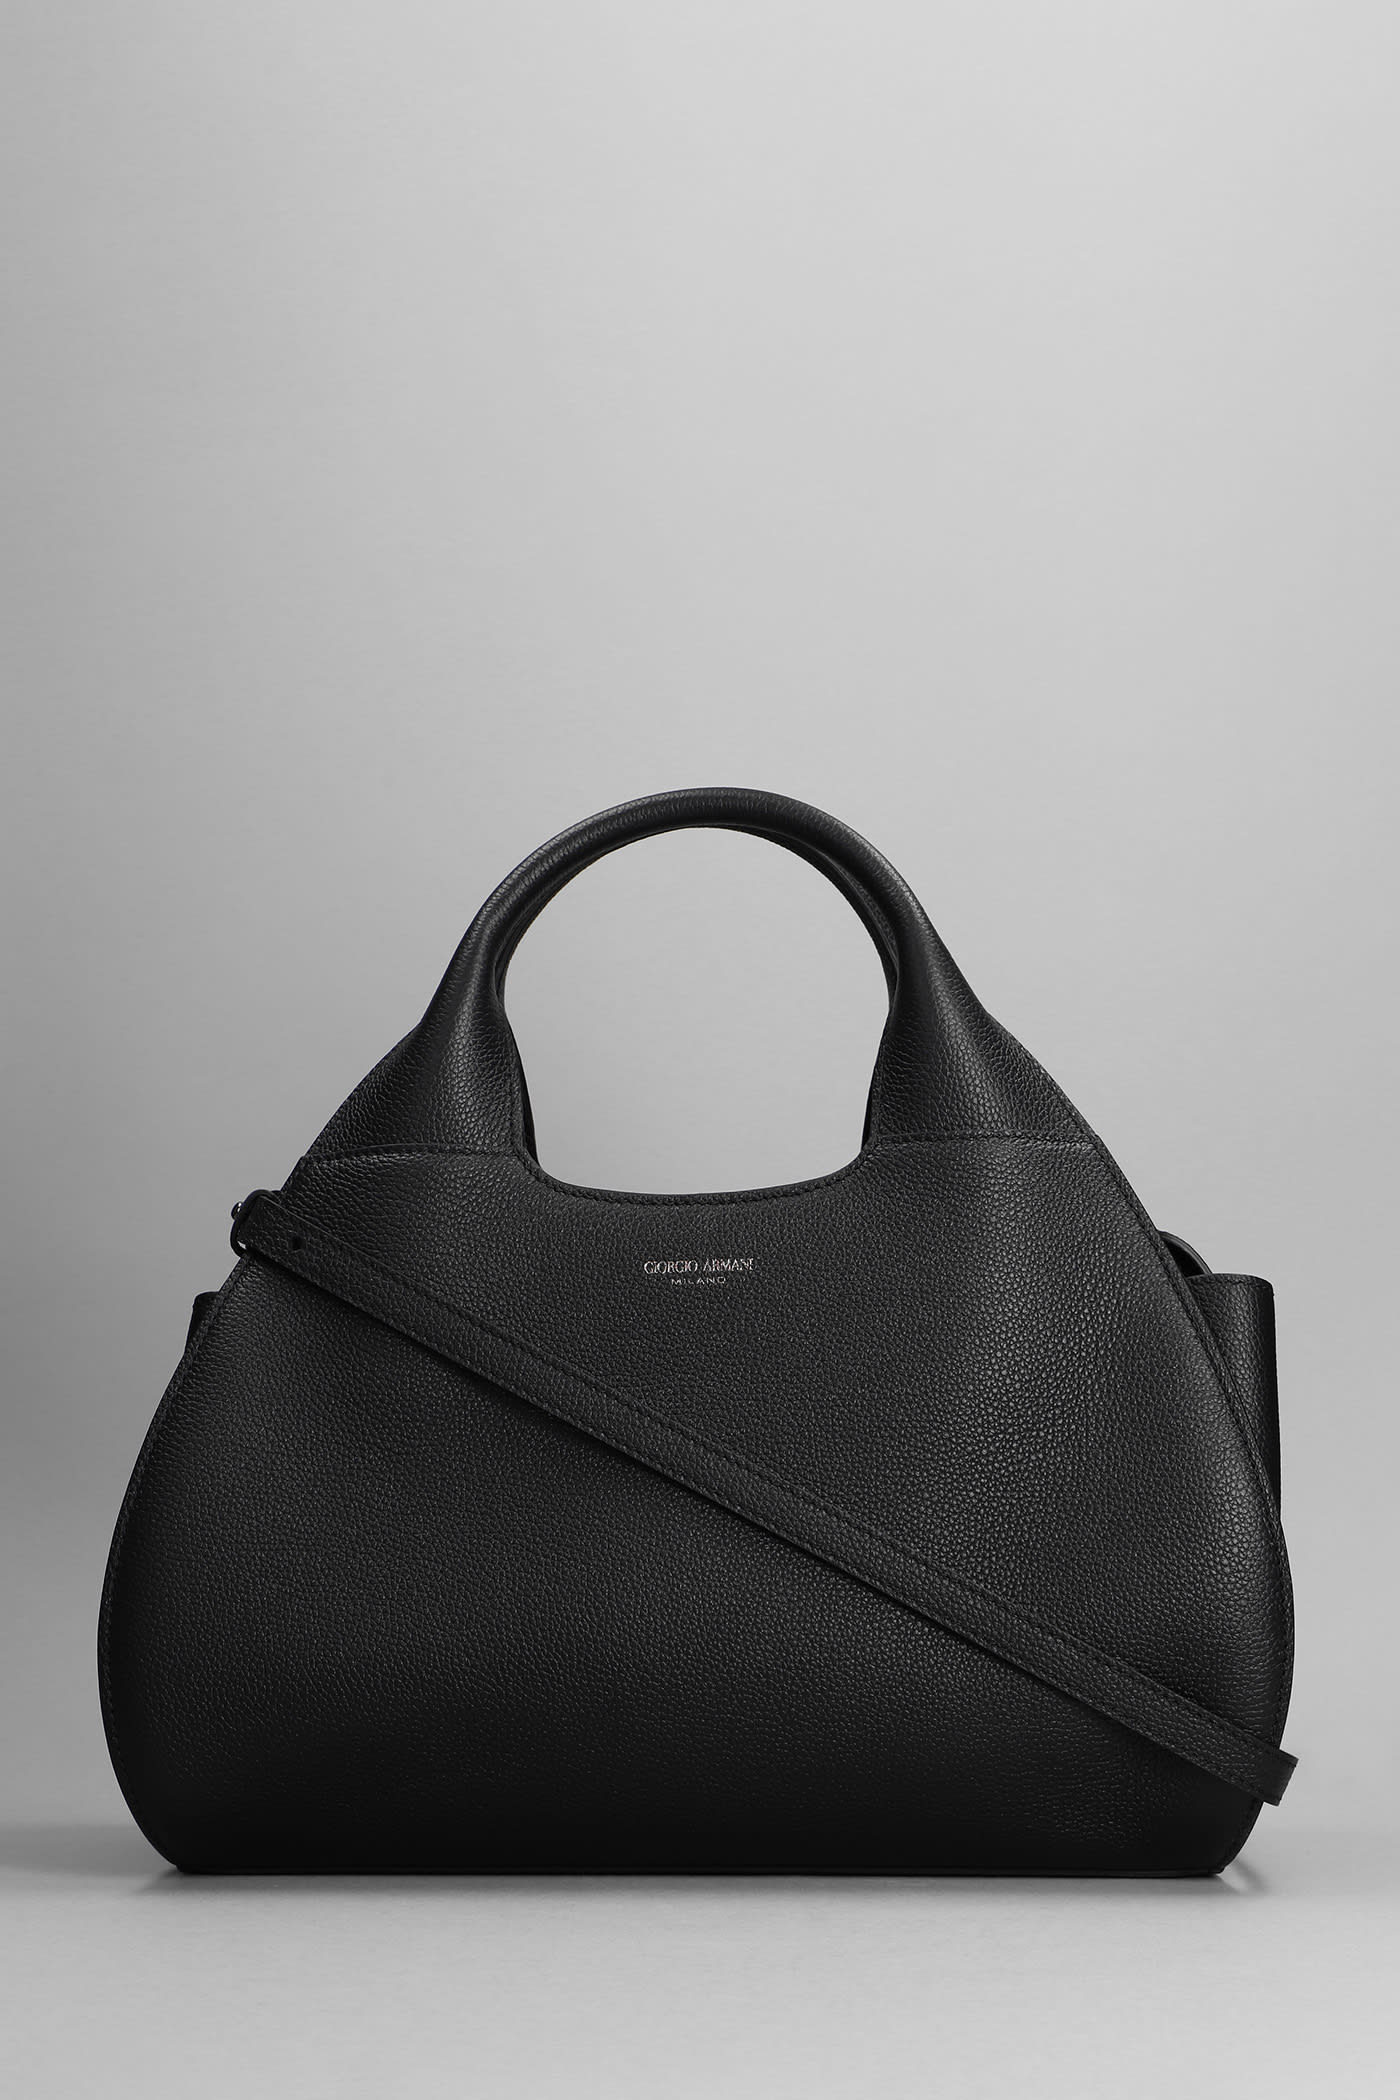 Giorgio Armani Hand Bag In Black Leather